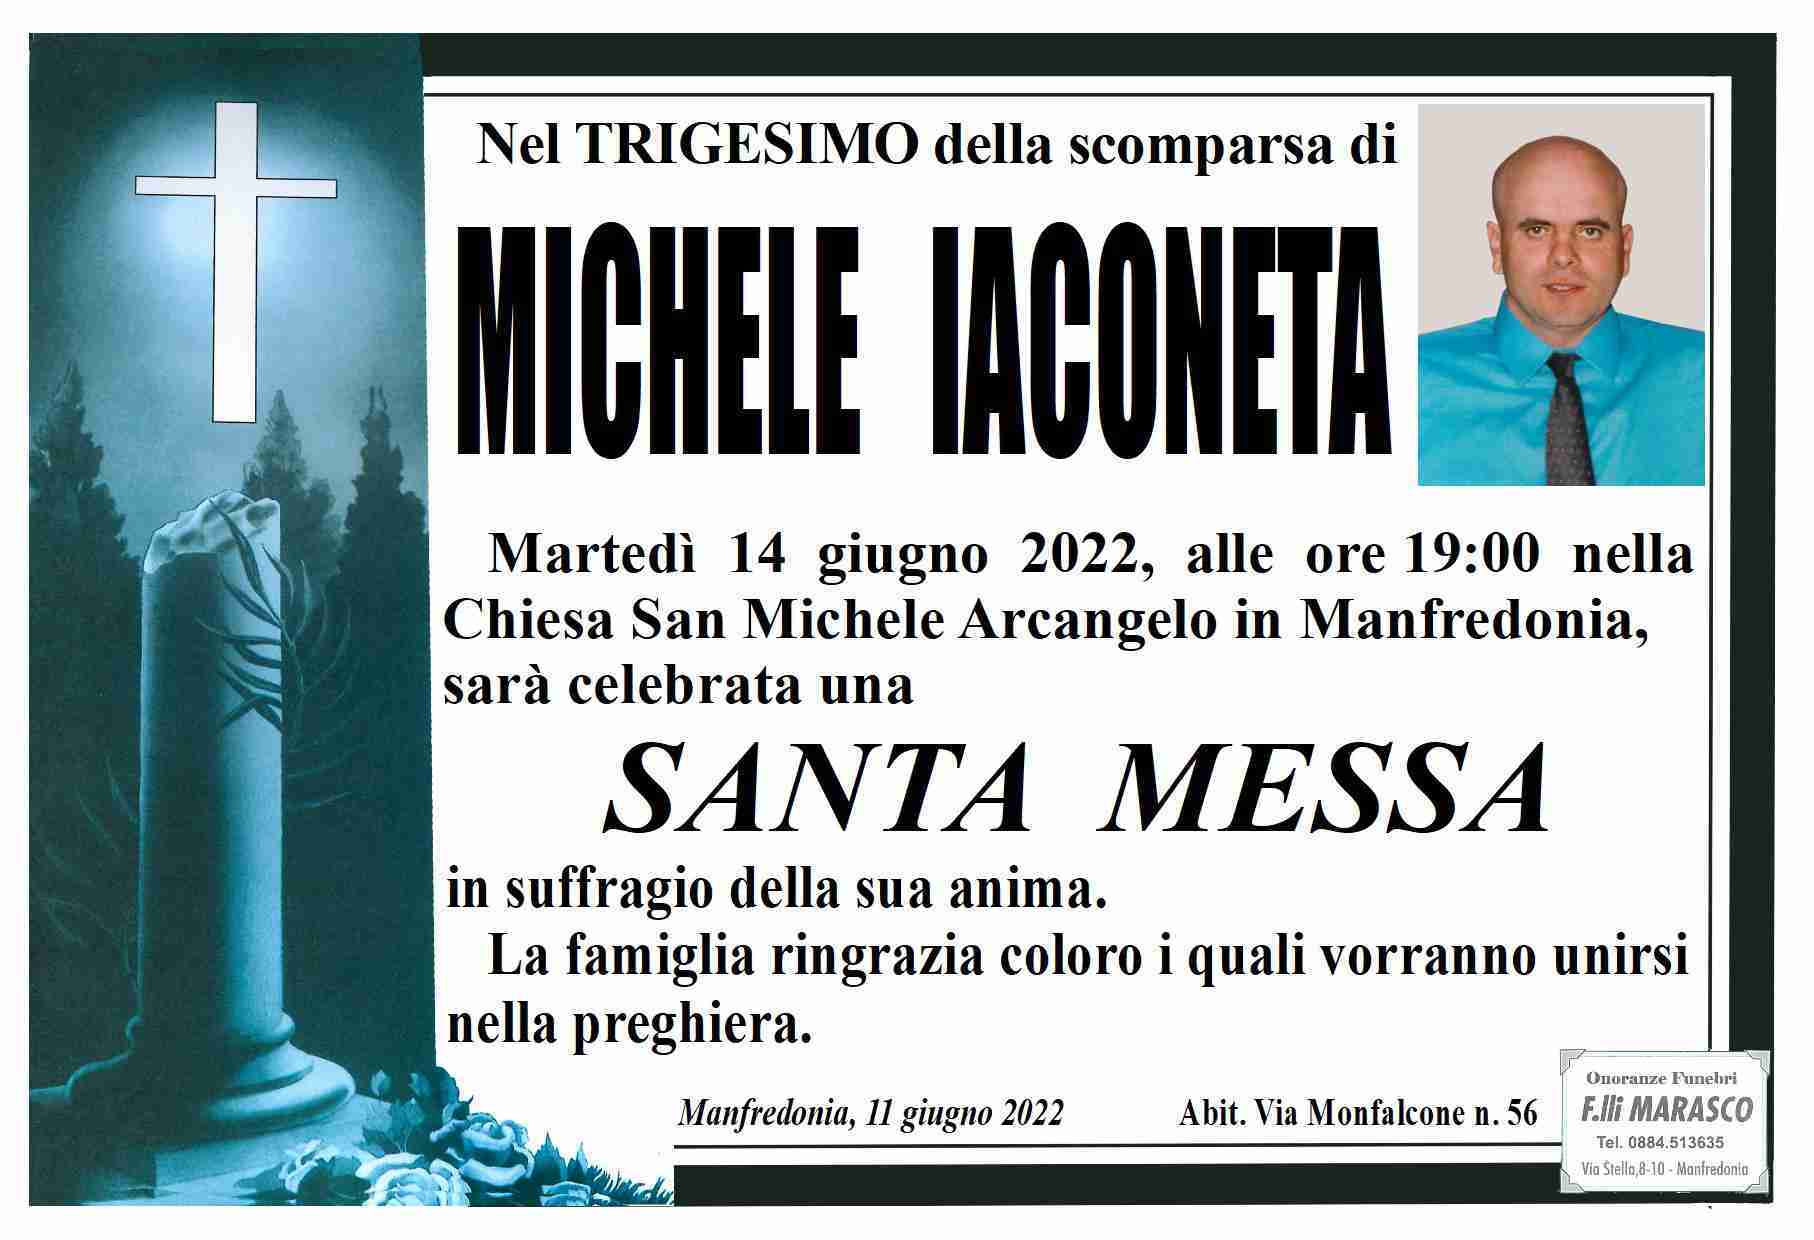 Michele Iaconeta